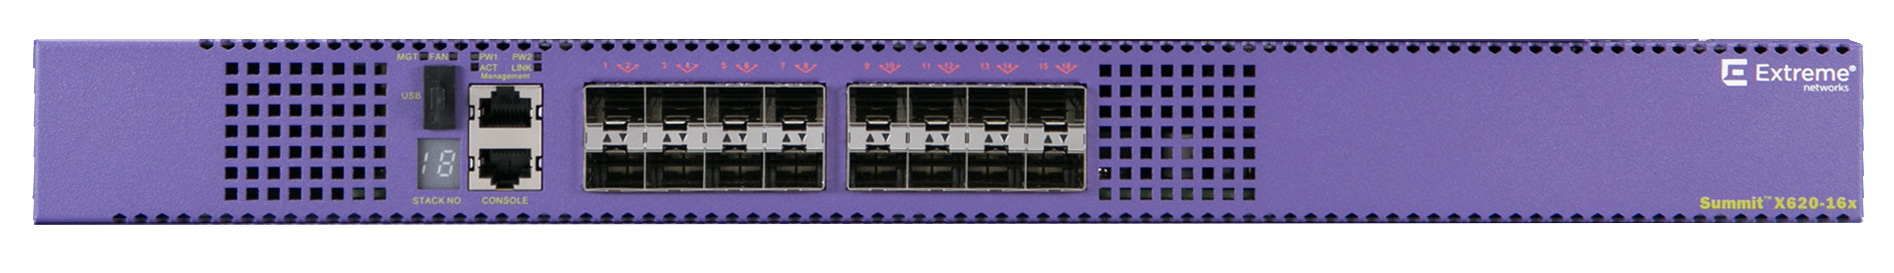 Extreme network SUMMIT X620-16X